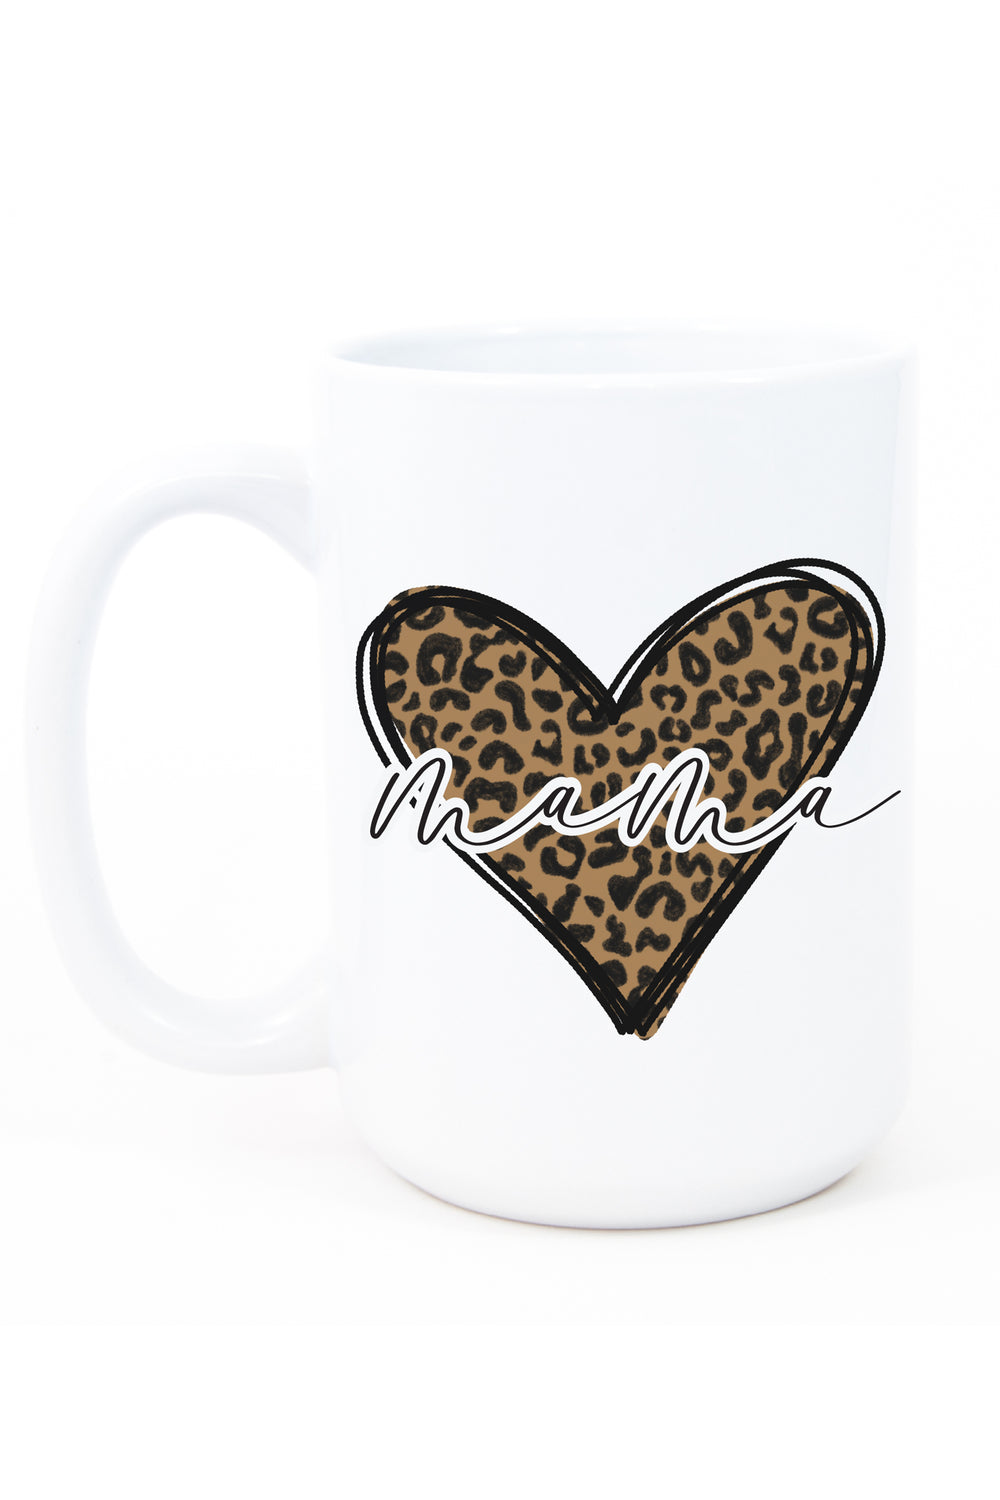 Mimi and Bear Designs 15oz ceramic graphic mug - Mama Leopard